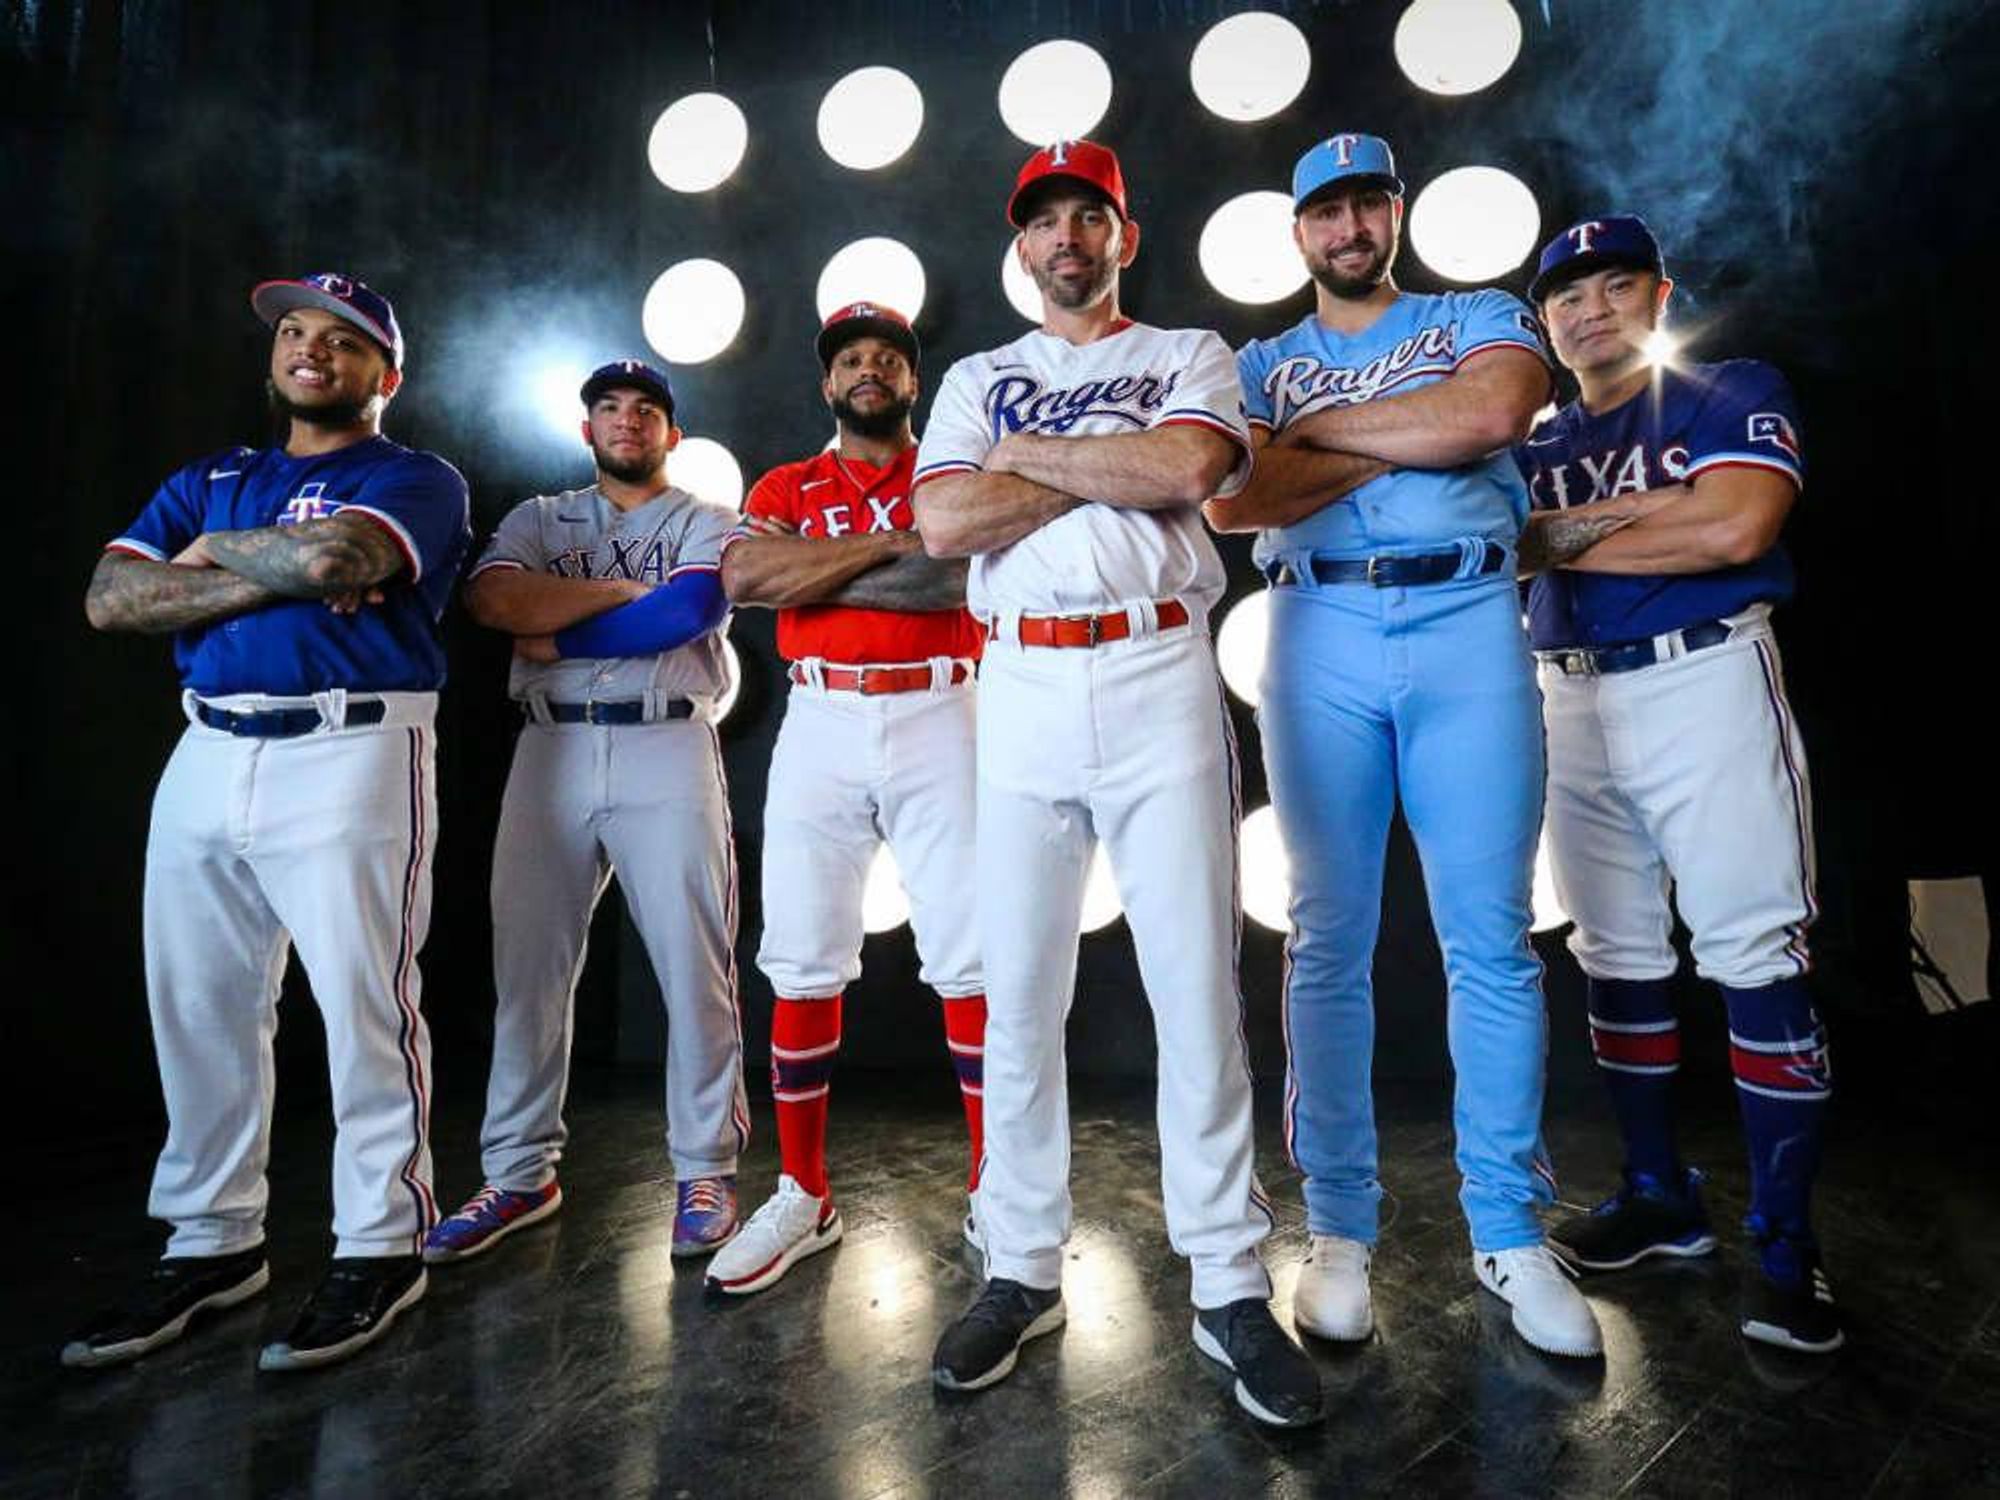 Wild Bill's Sports Apparel :: All Team Gear :: Texas Rangers T-Shirt